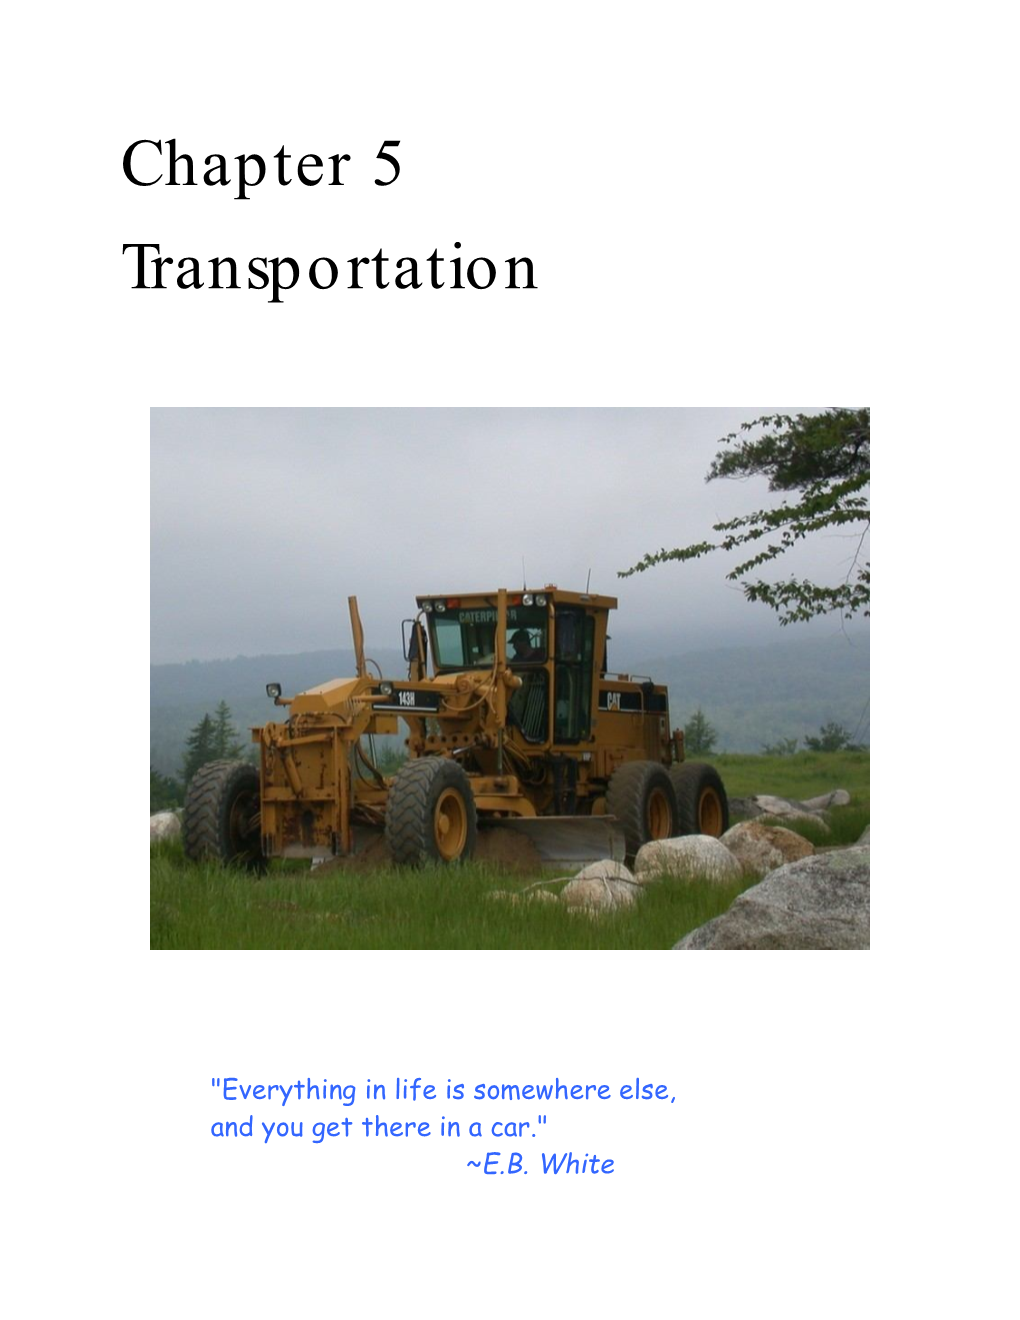 Chapter 5 Transportation